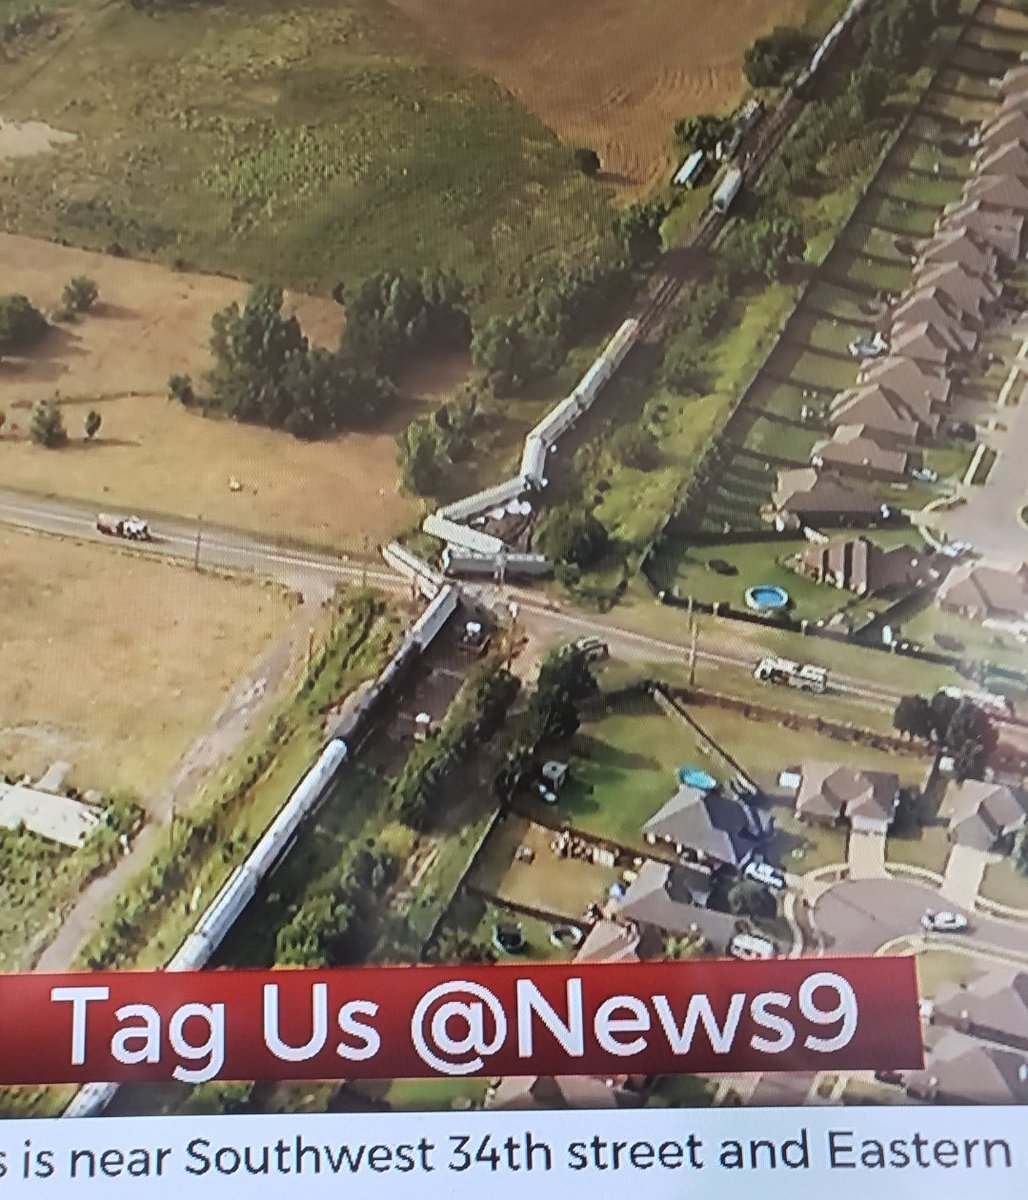 Another train derailment in Oklahoma. #trainderailment #TRAIN @rawsalerts @xDaily